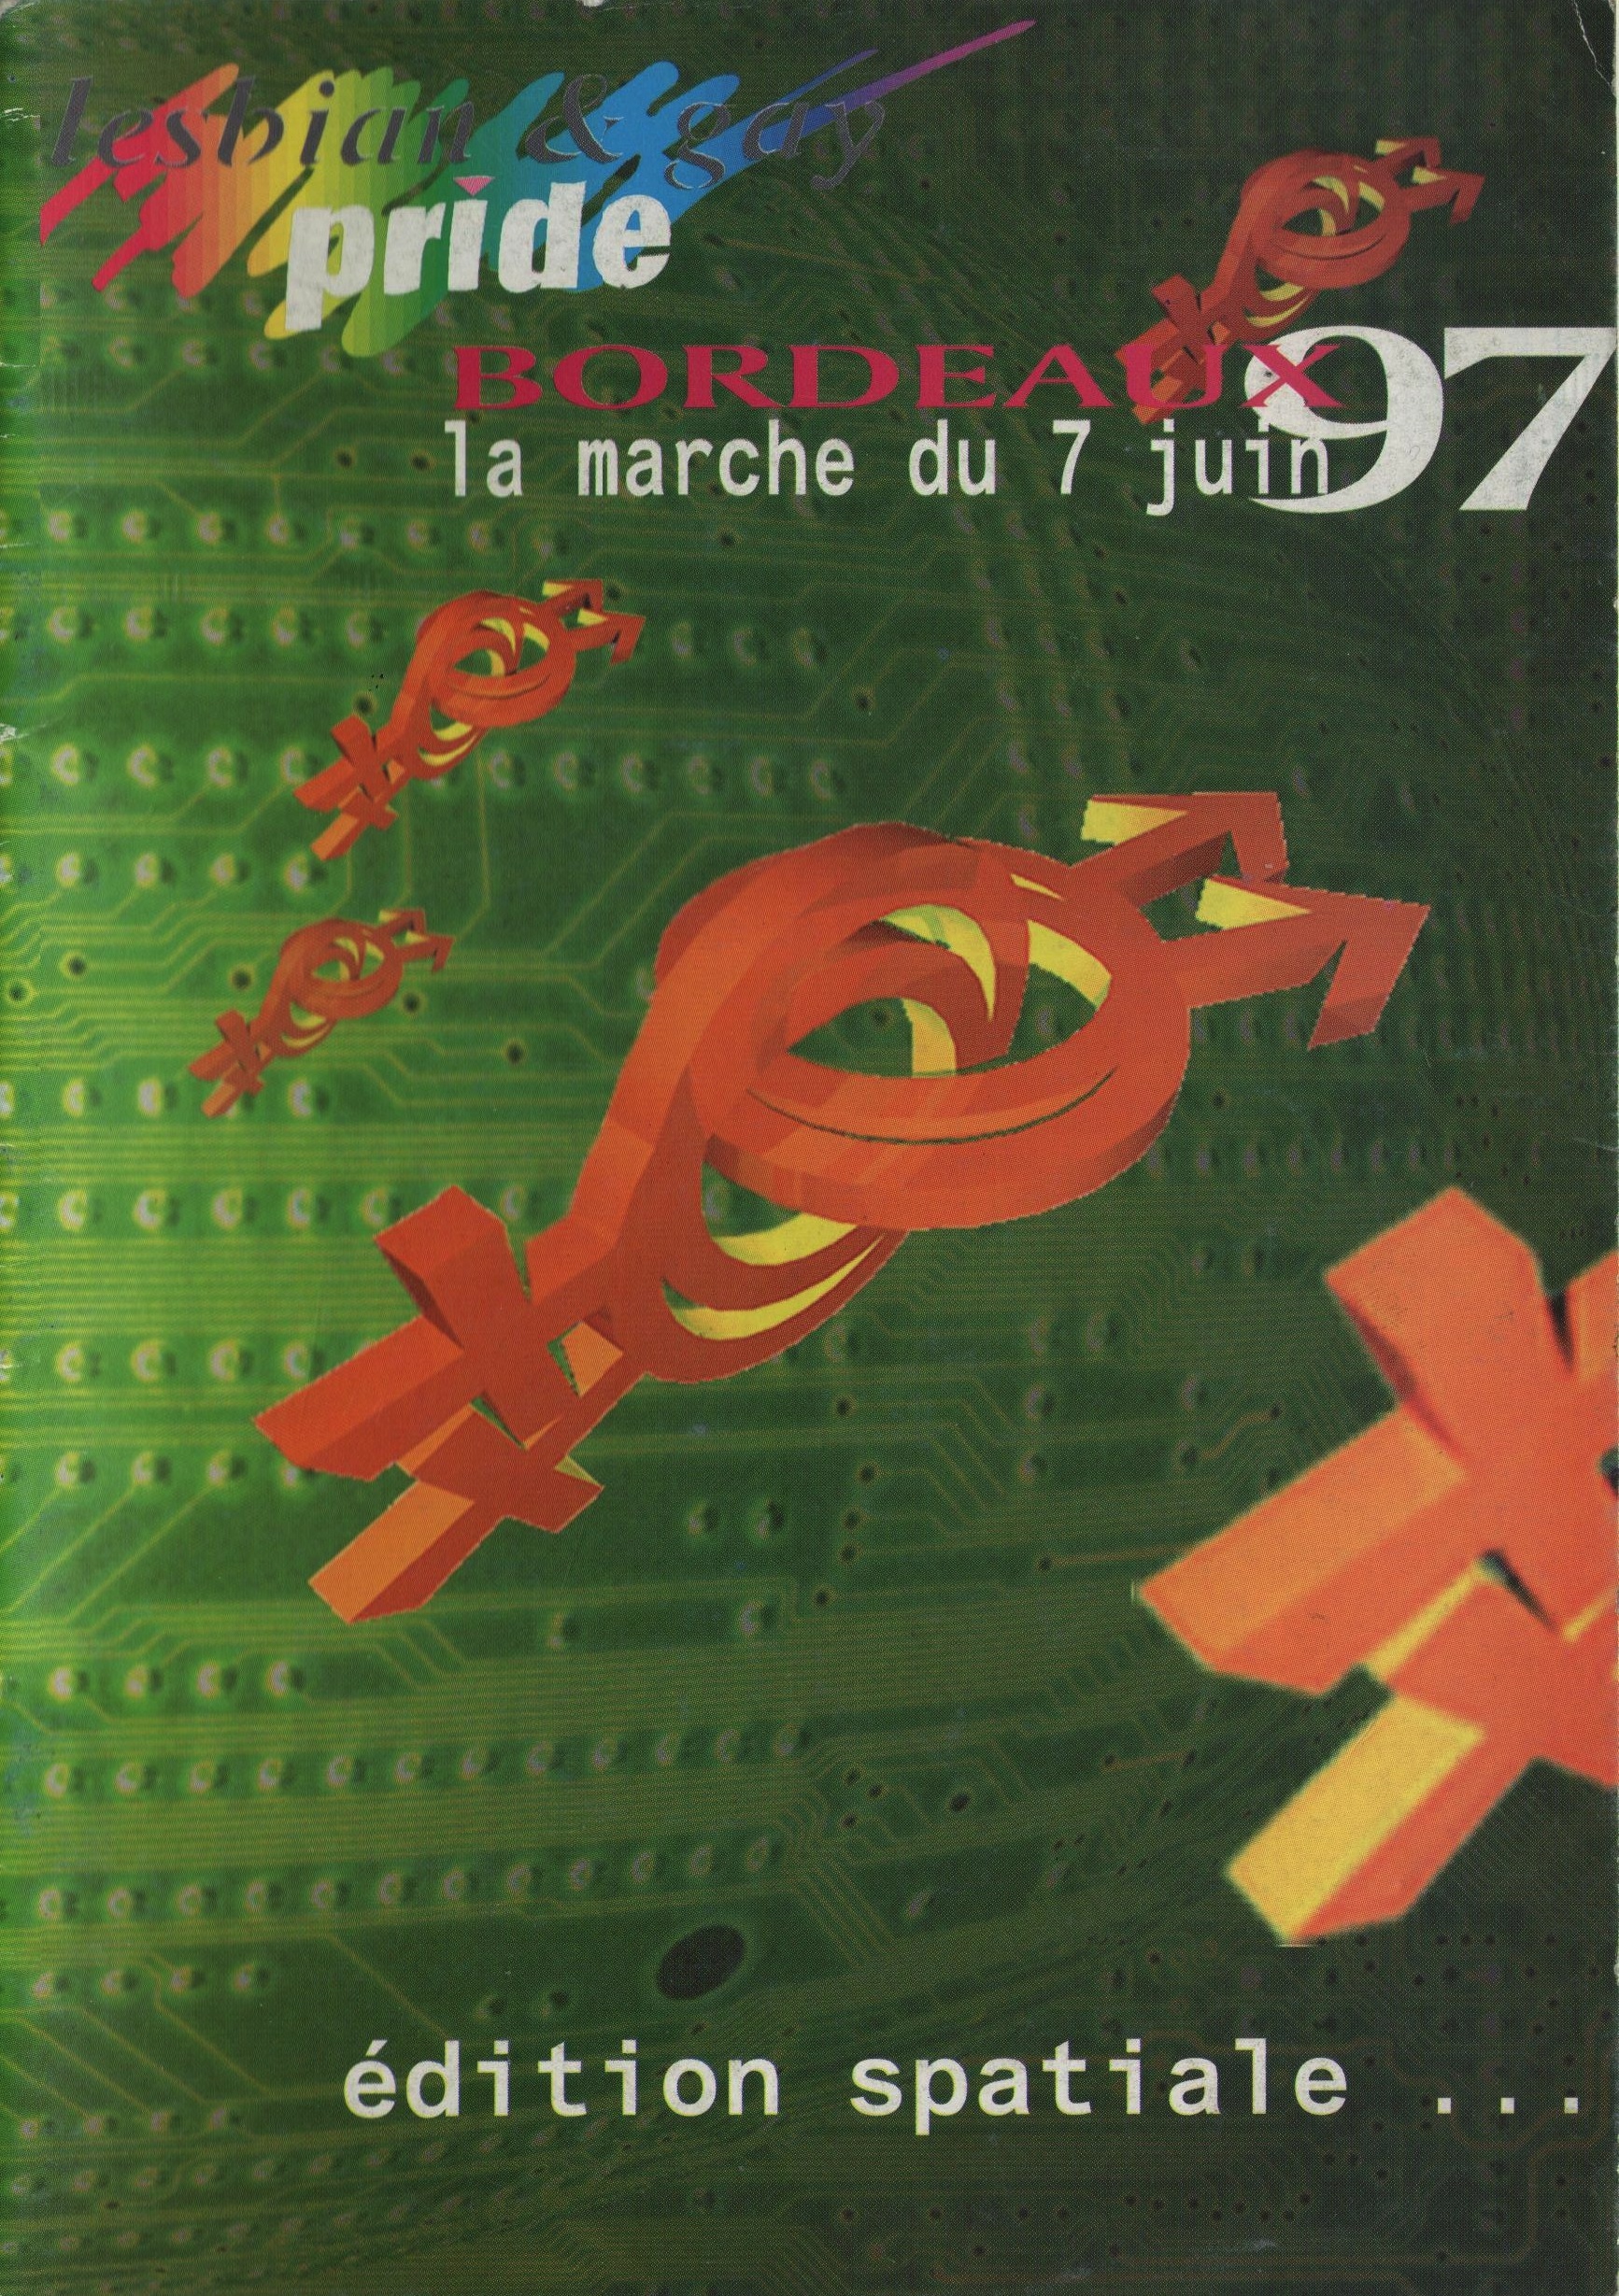 Affiche LGP 1997